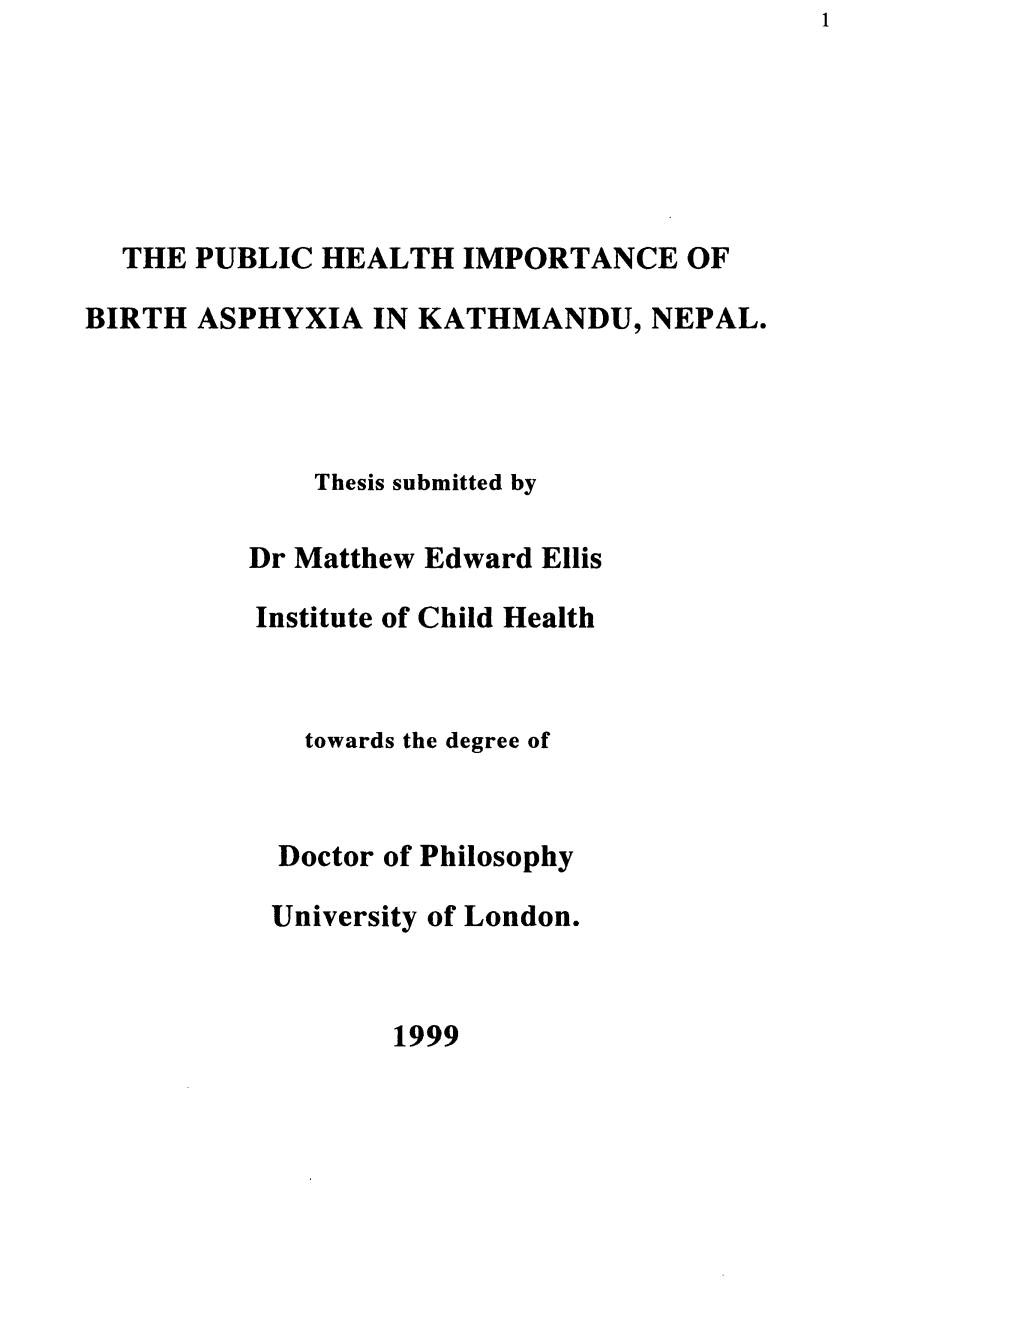 The Public Health Importance of Birth Asphyxia in Kathmandu, Nepal